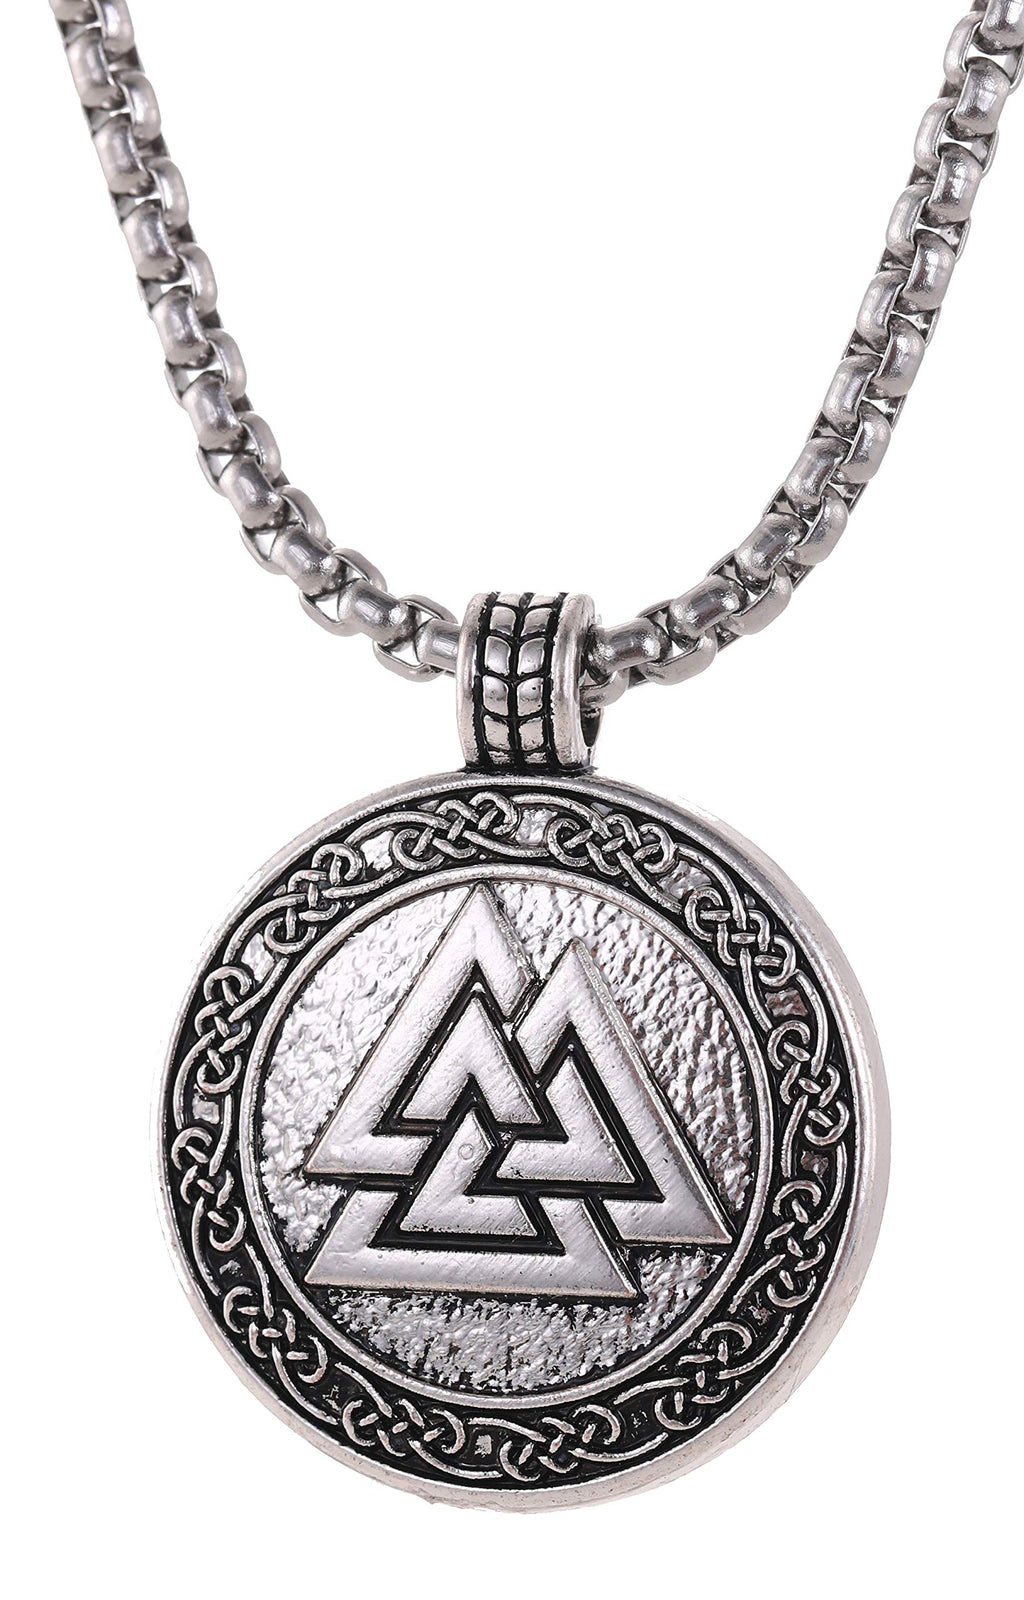 [Australia] - EUEAVAN Valknut Symbol of Odin Charms Pendant Necklace for Men Women Teens 